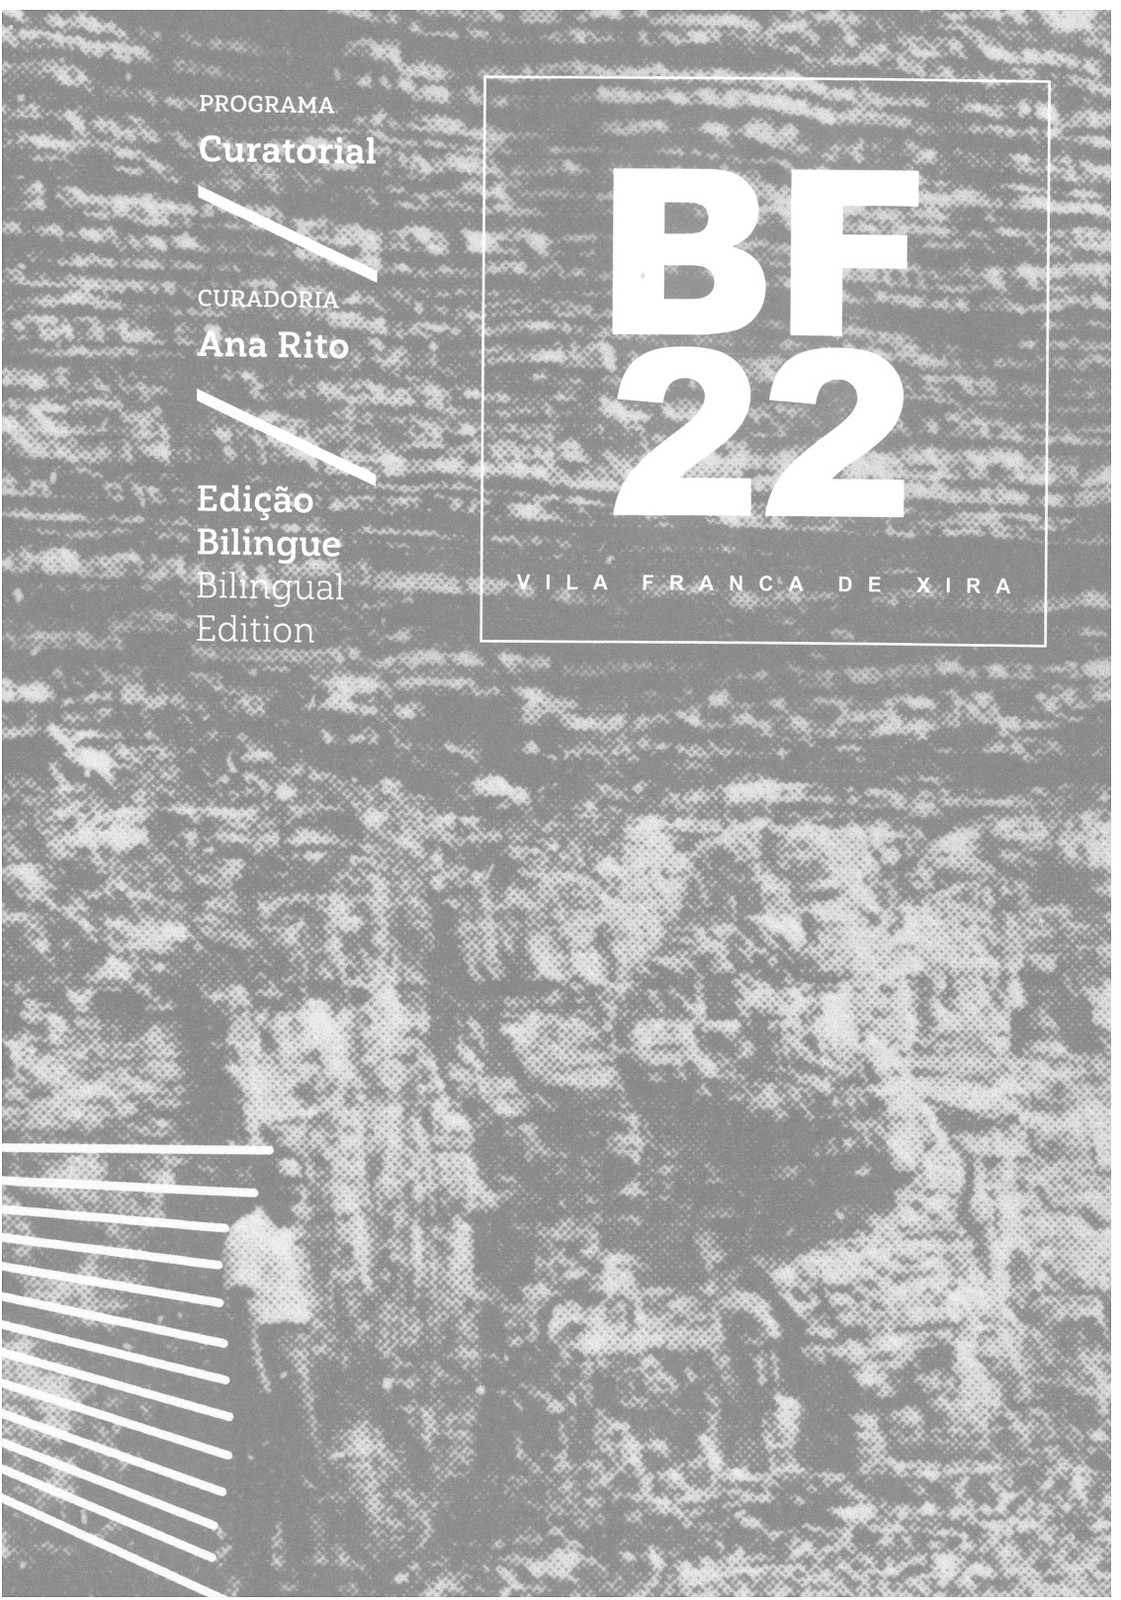 Programa Curatorial BF22 